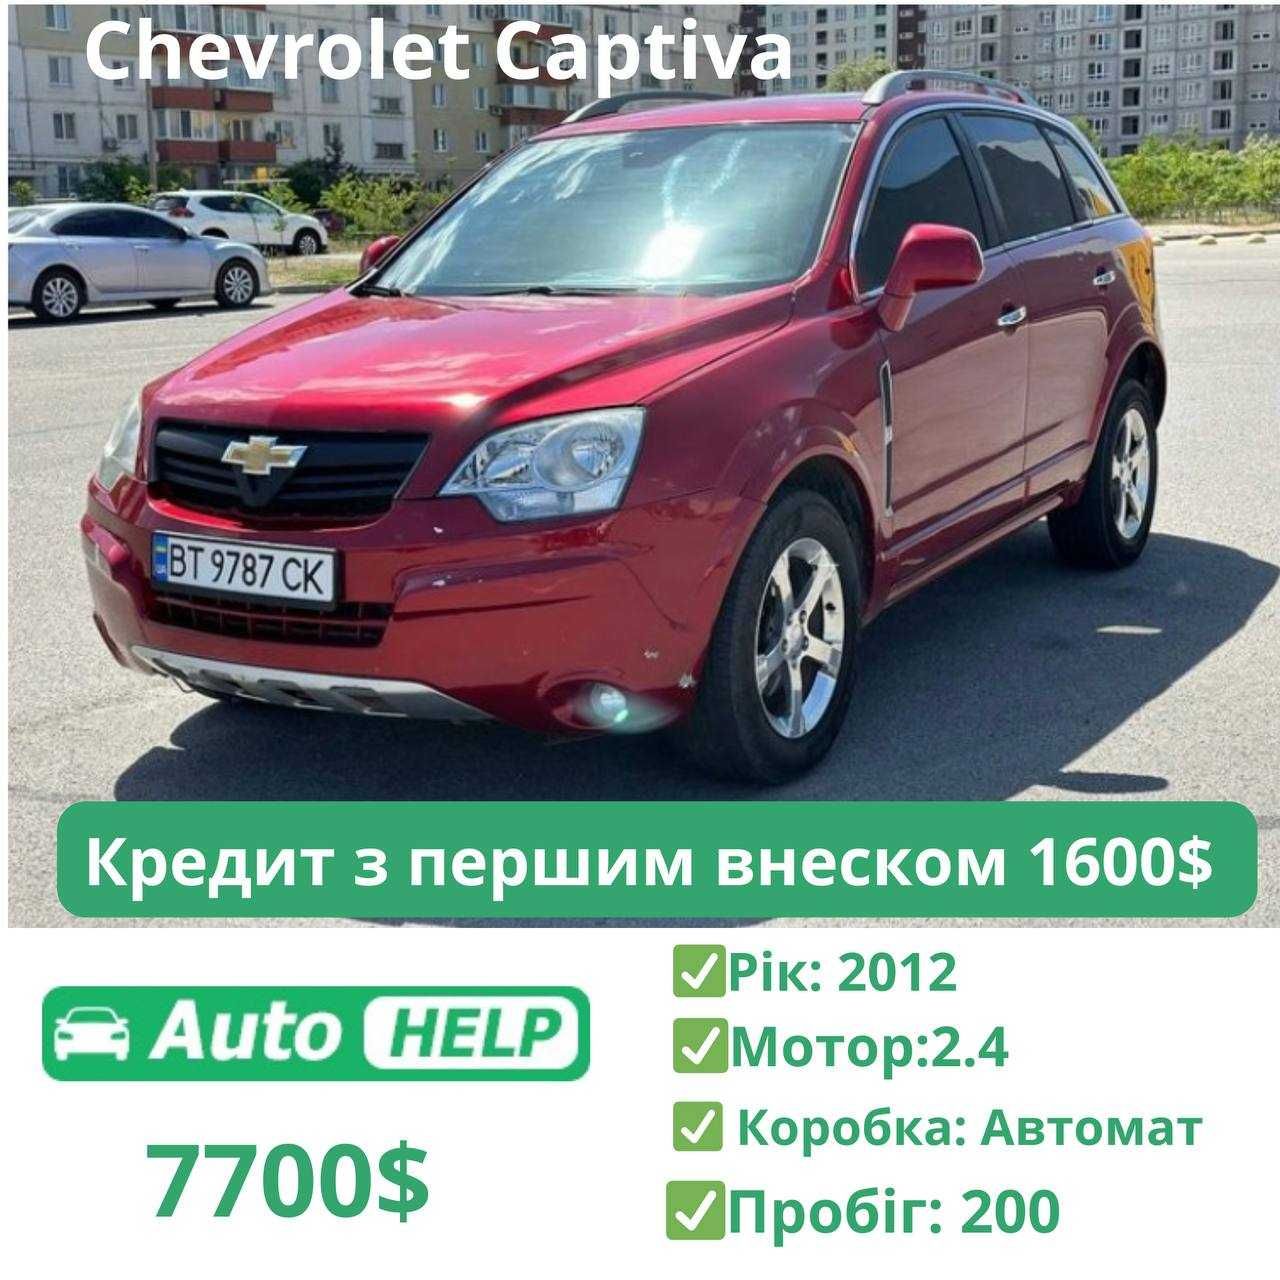 Chevrolet Captiva 2012 2.4 Бензин Обмін/Розстрочка п внесок 1600$